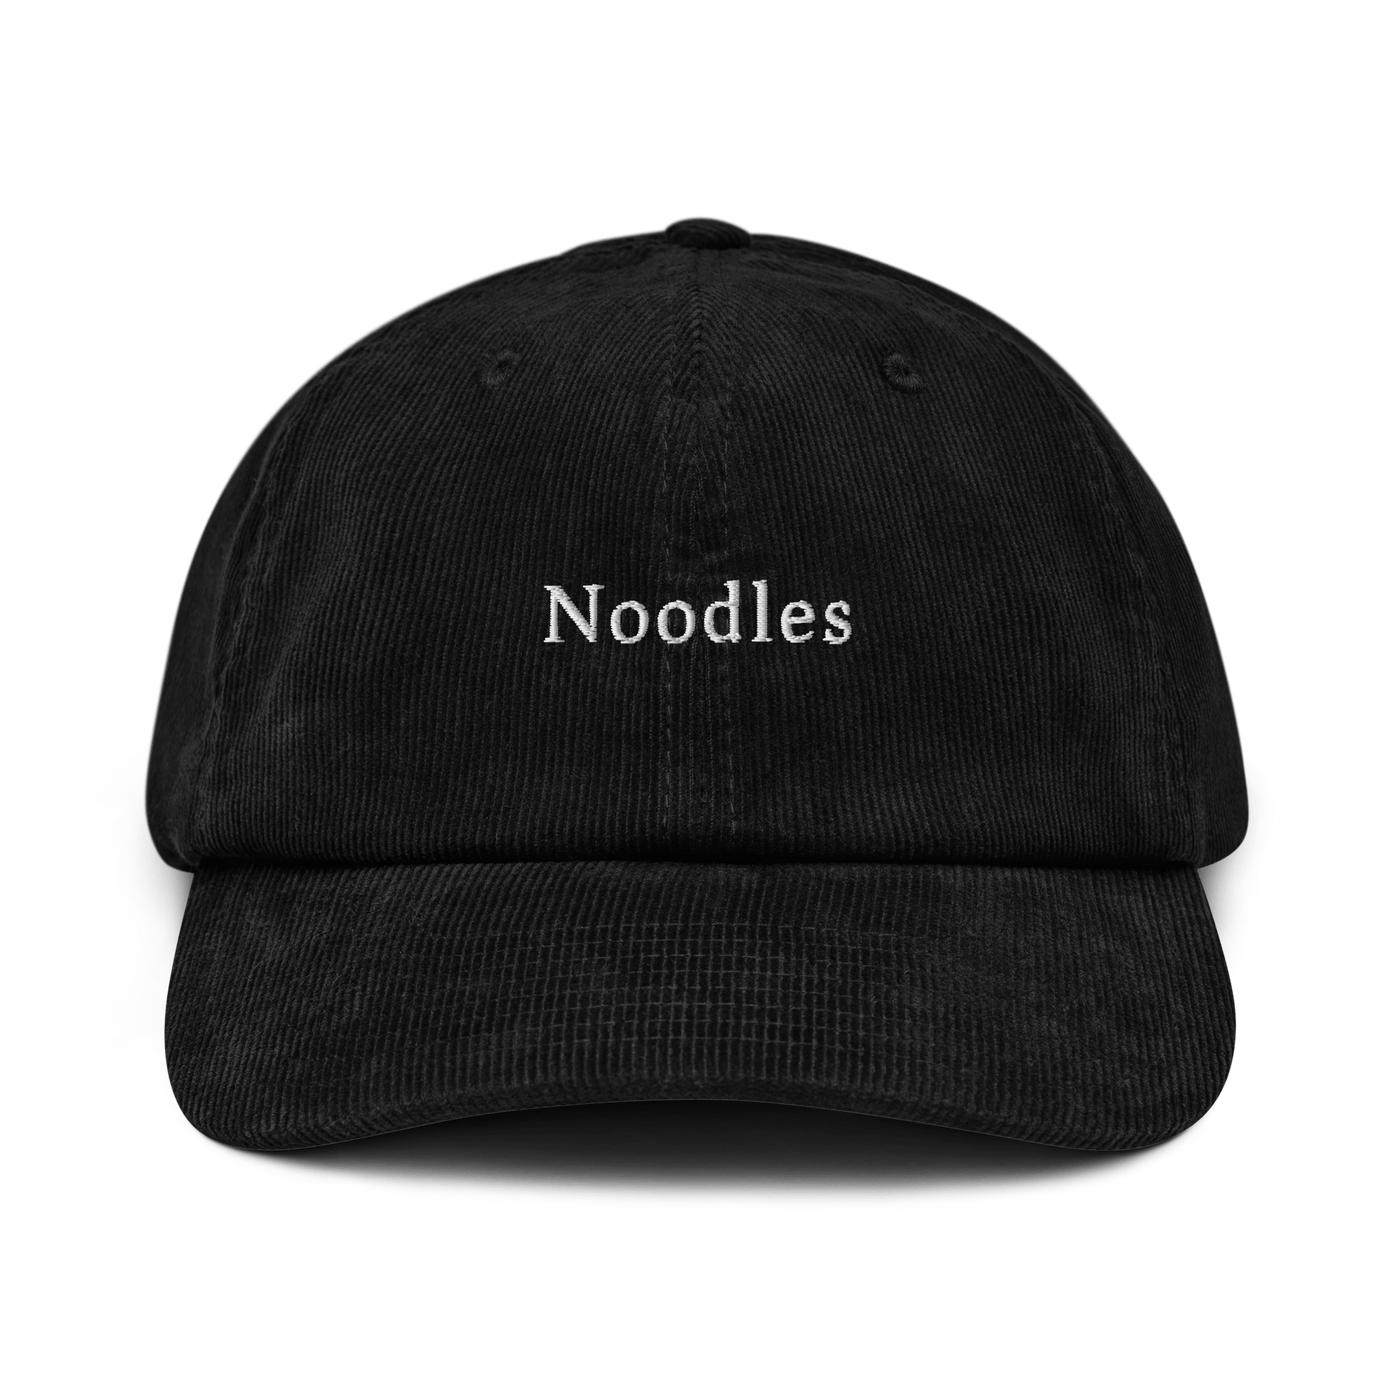 Noodles Corduroy hat - Black - - Just Another Cap Store